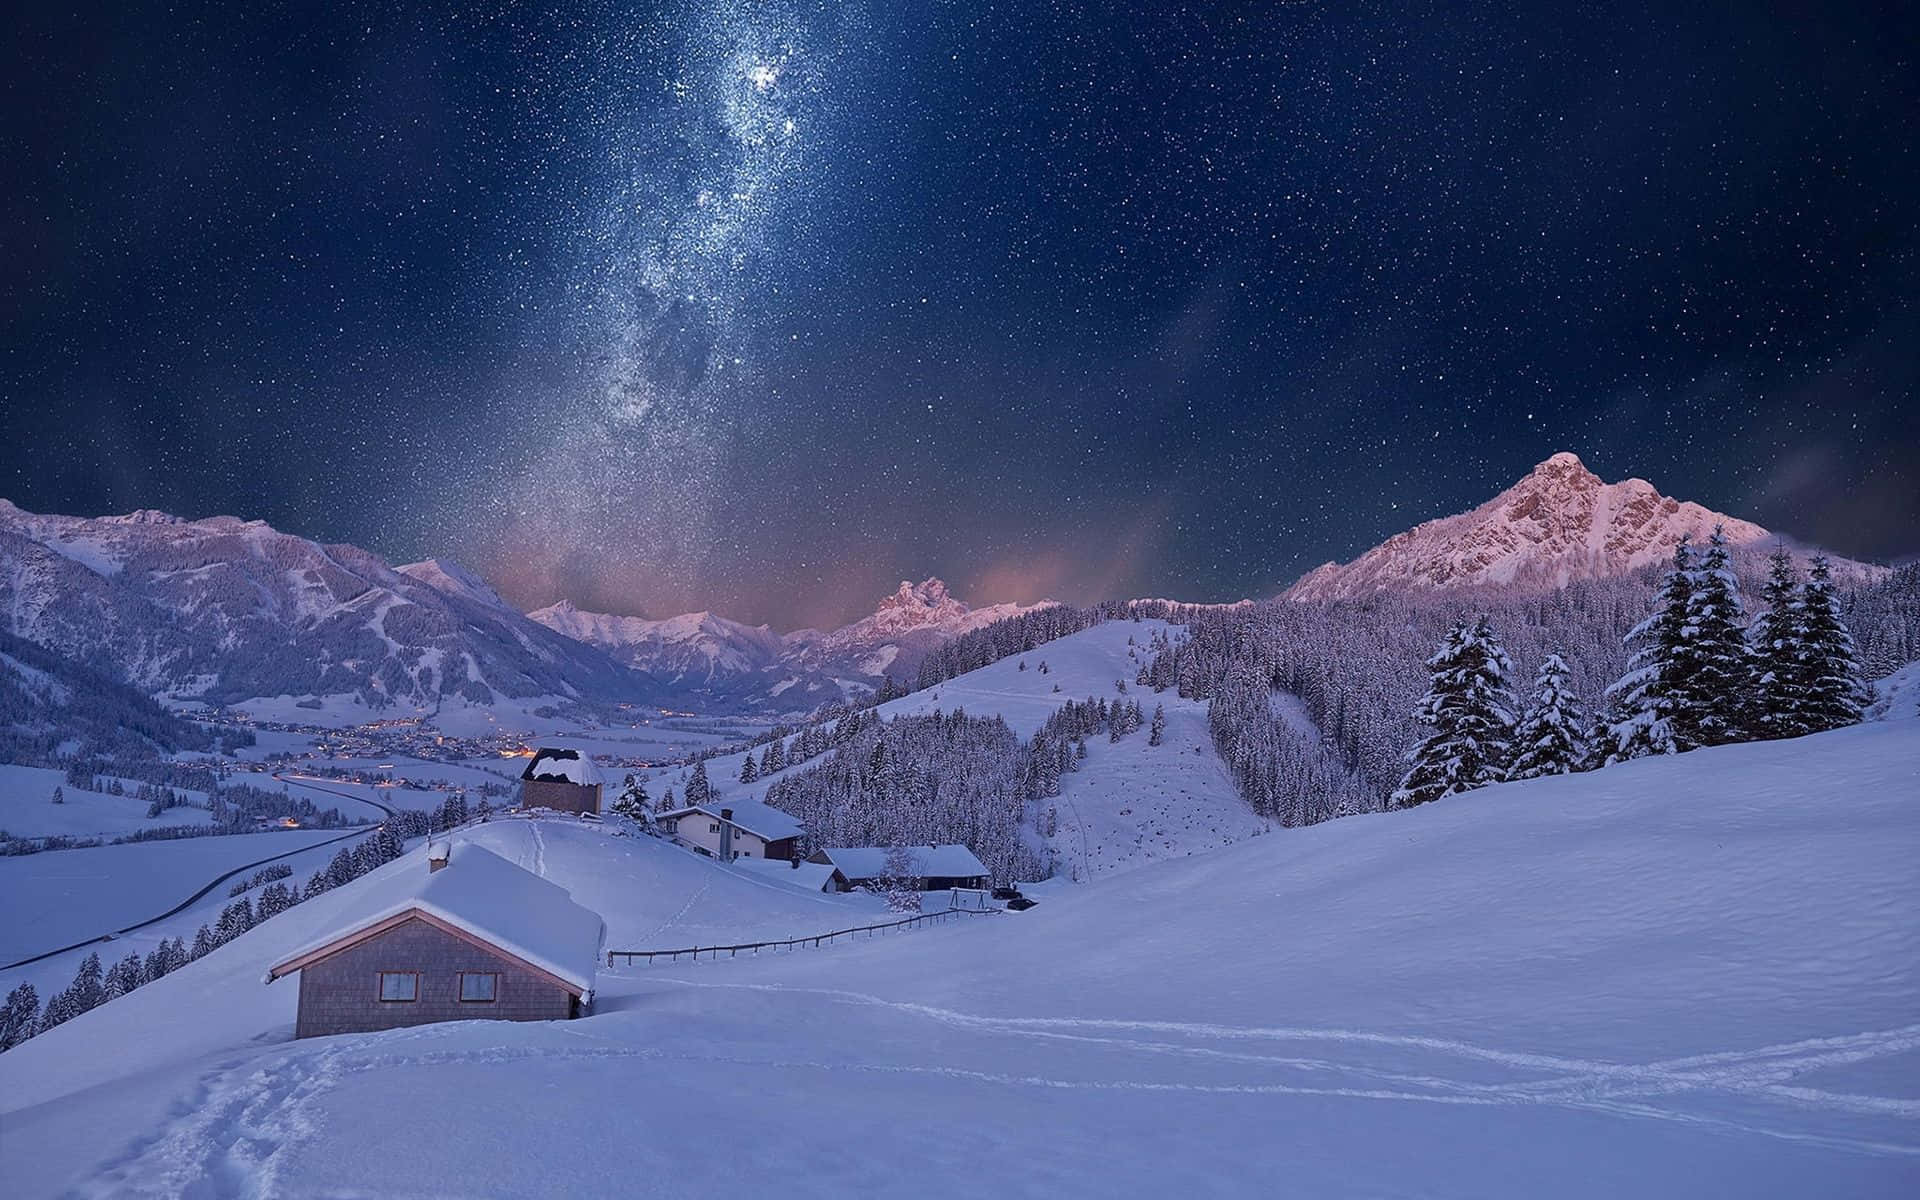 "Snowy Tranquility: A Winter Desktop Background"